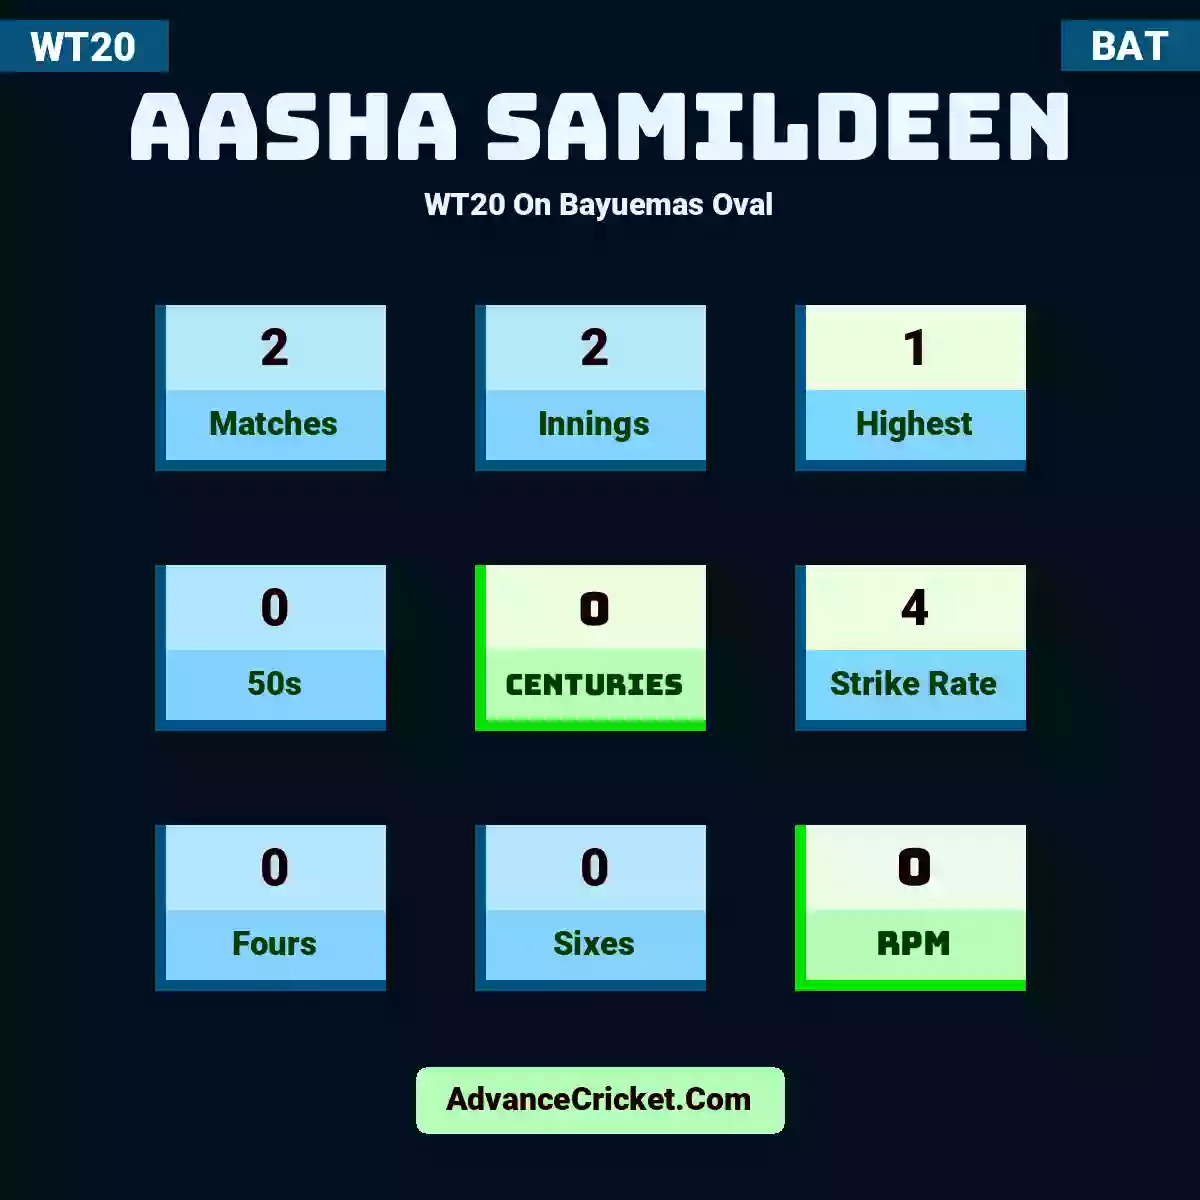 Aasha Samildeen WT20  On Bayuemas Oval, Aasha Samildeen played 2 matches, scored 1 runs as highest, 0 half-centuries, and 0 centuries, with a strike rate of 4. A.Samildeen hit 0 fours and 0 sixes, with an RPM of 0.